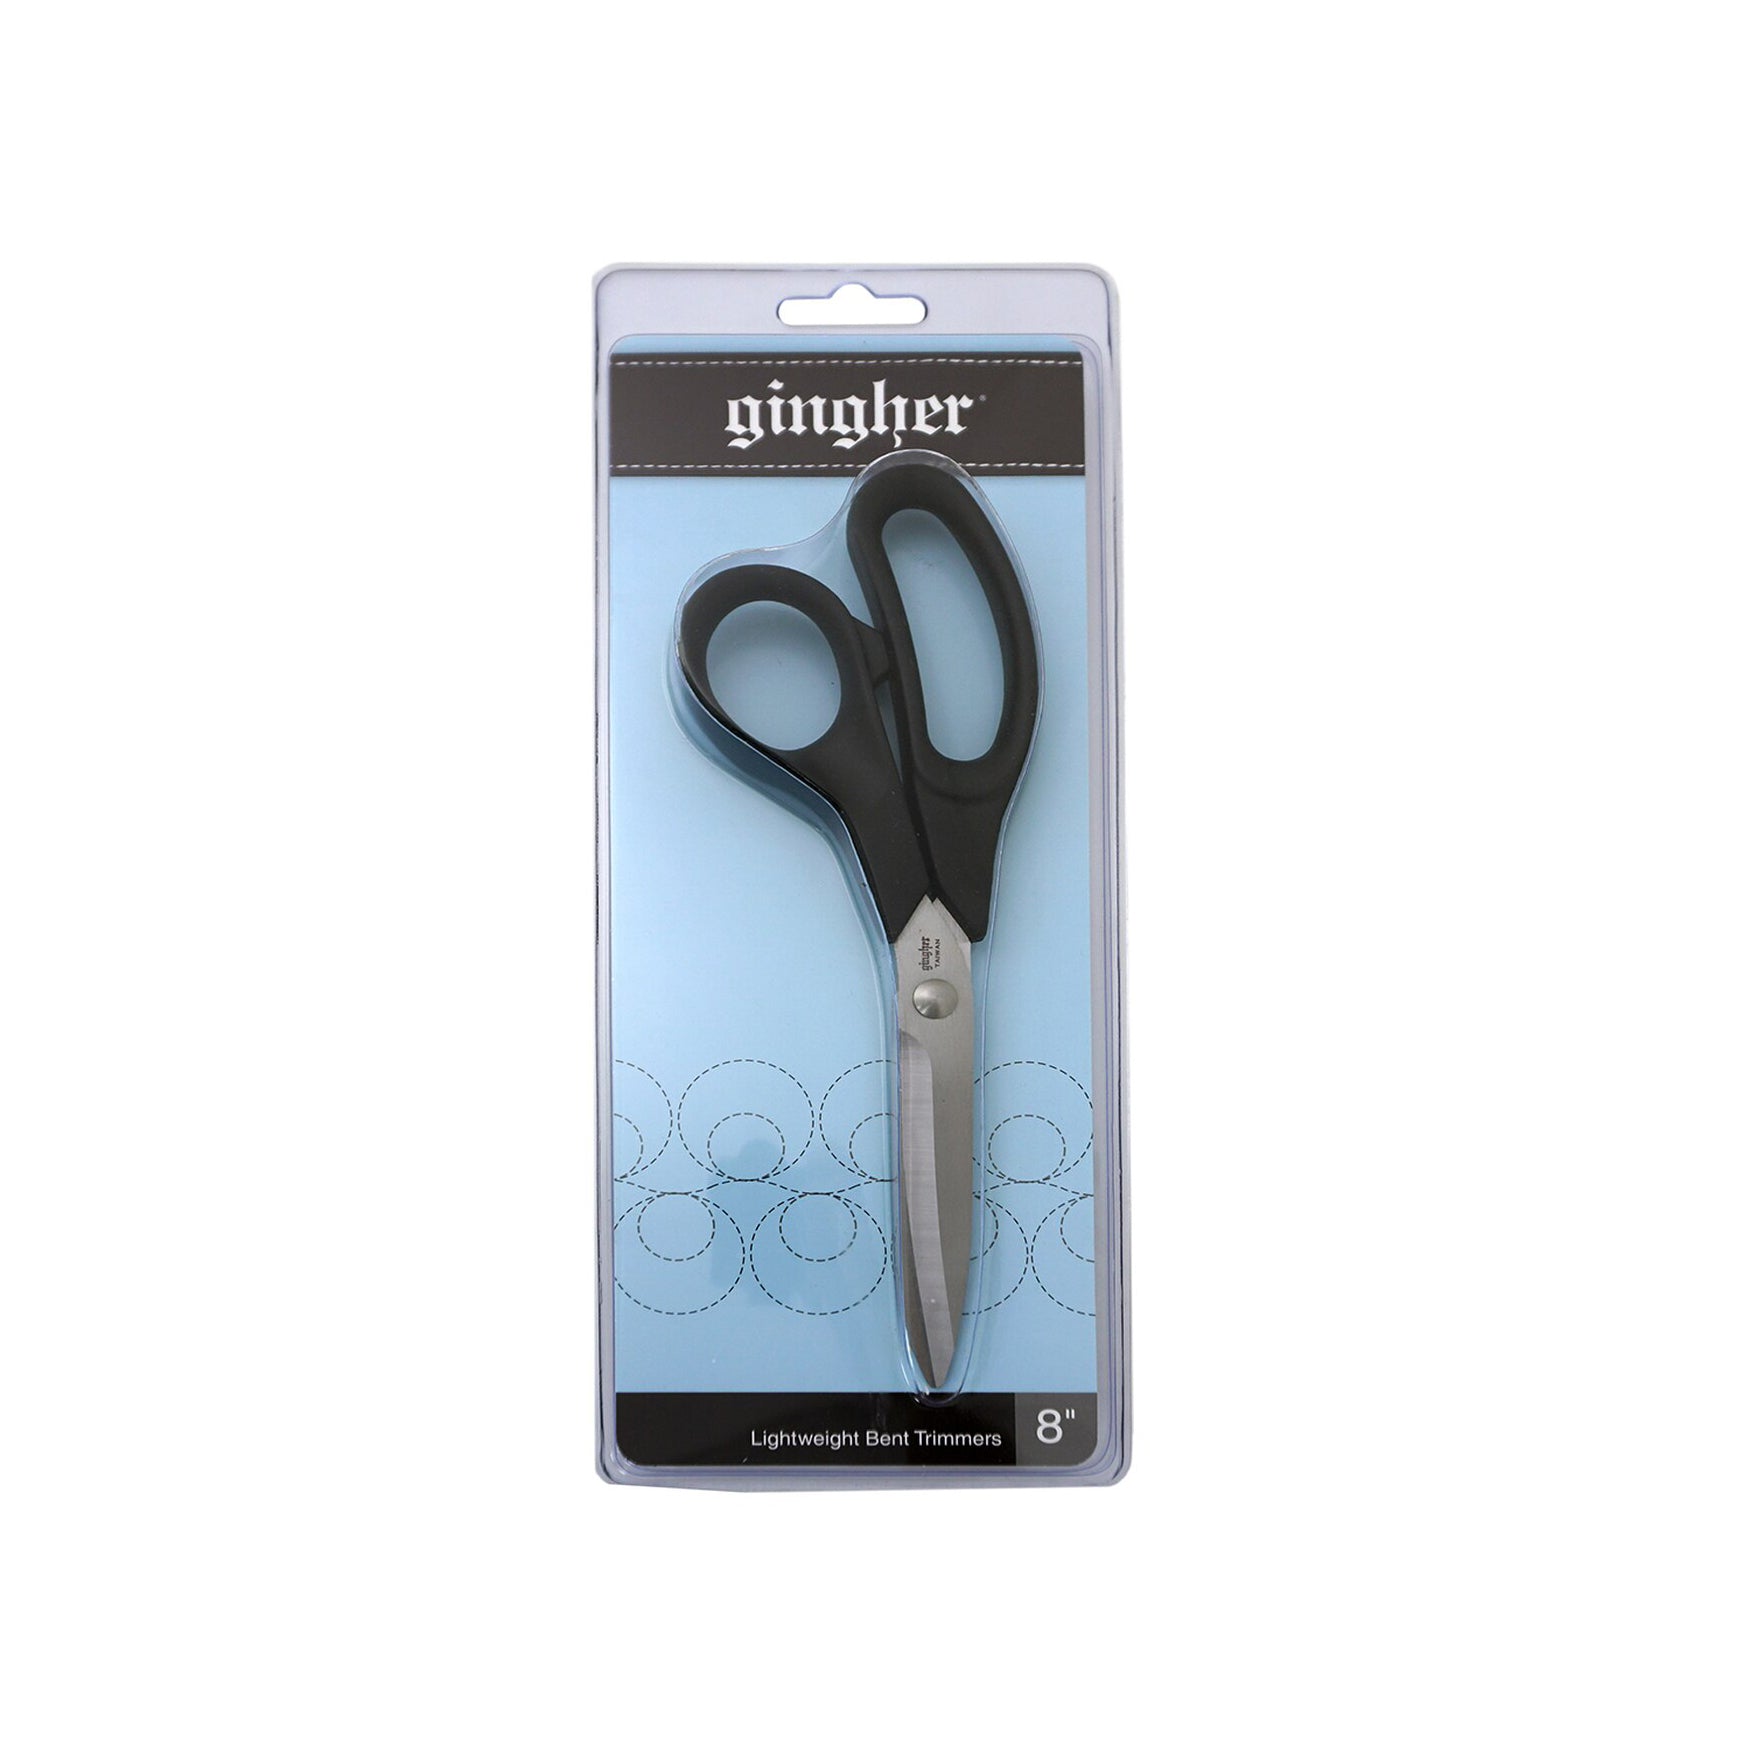 Gingher 8 Lightweight Bent Trimmers